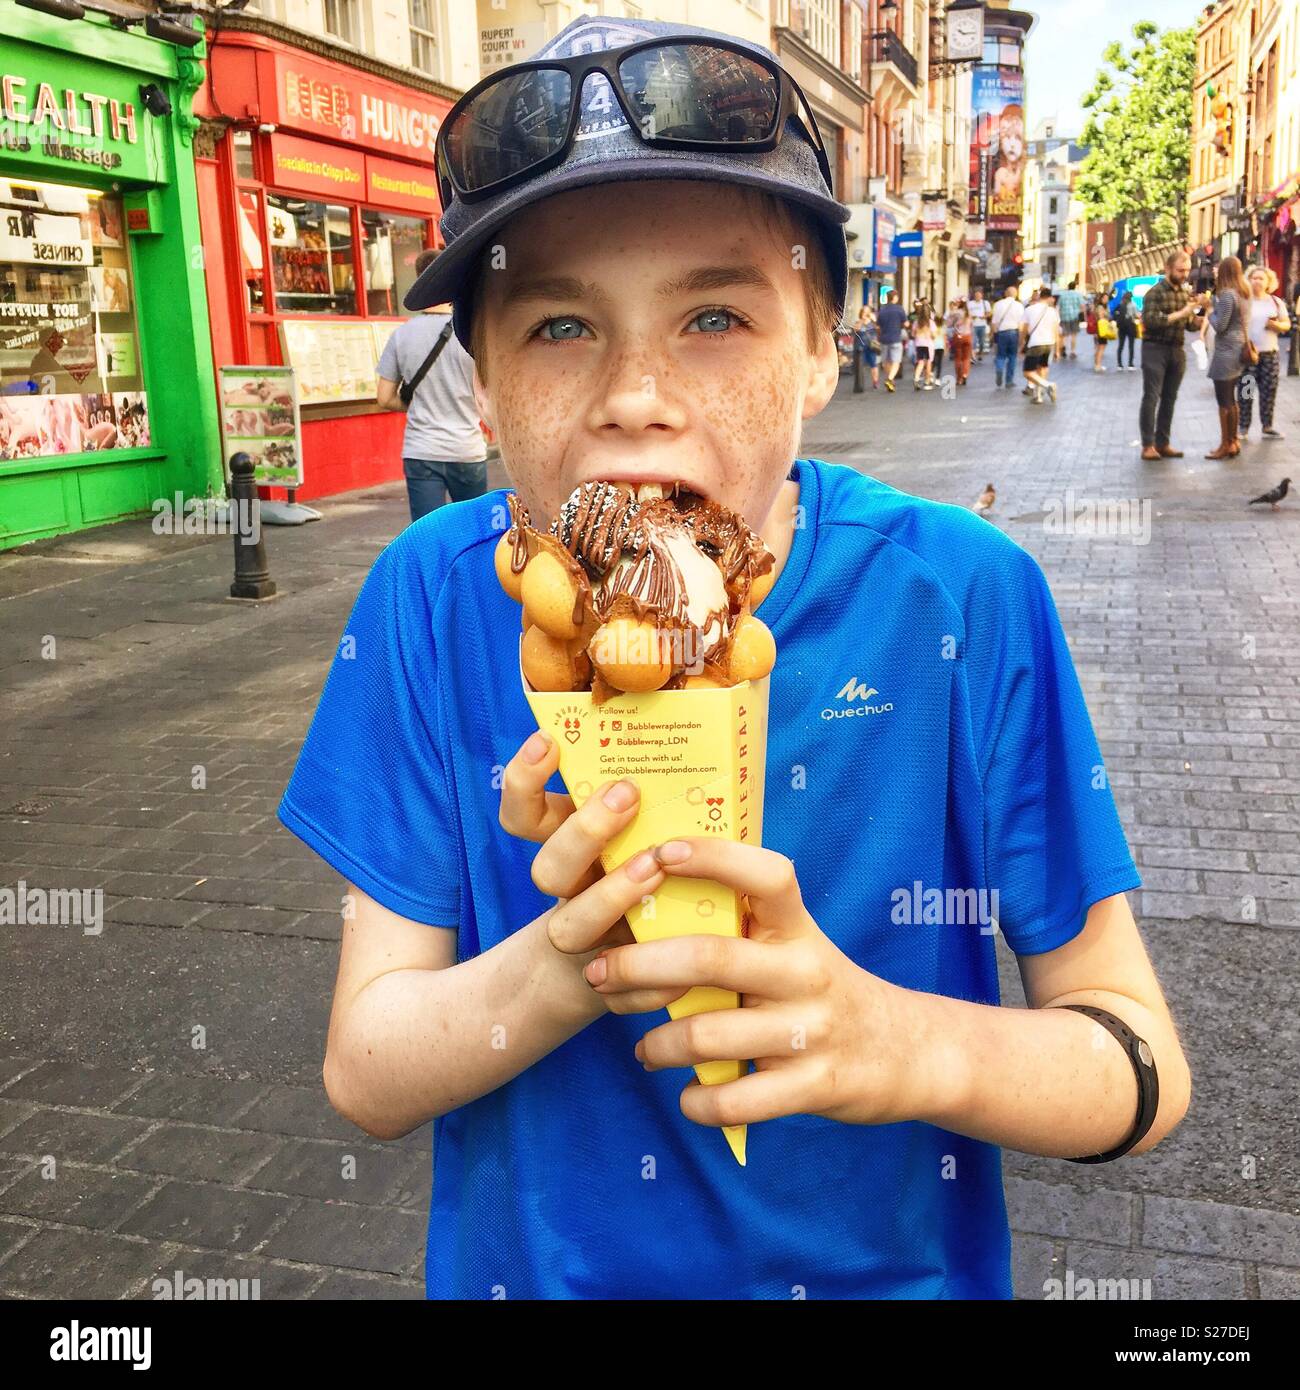 Estate ice cream boy a Londra. Foto Stock